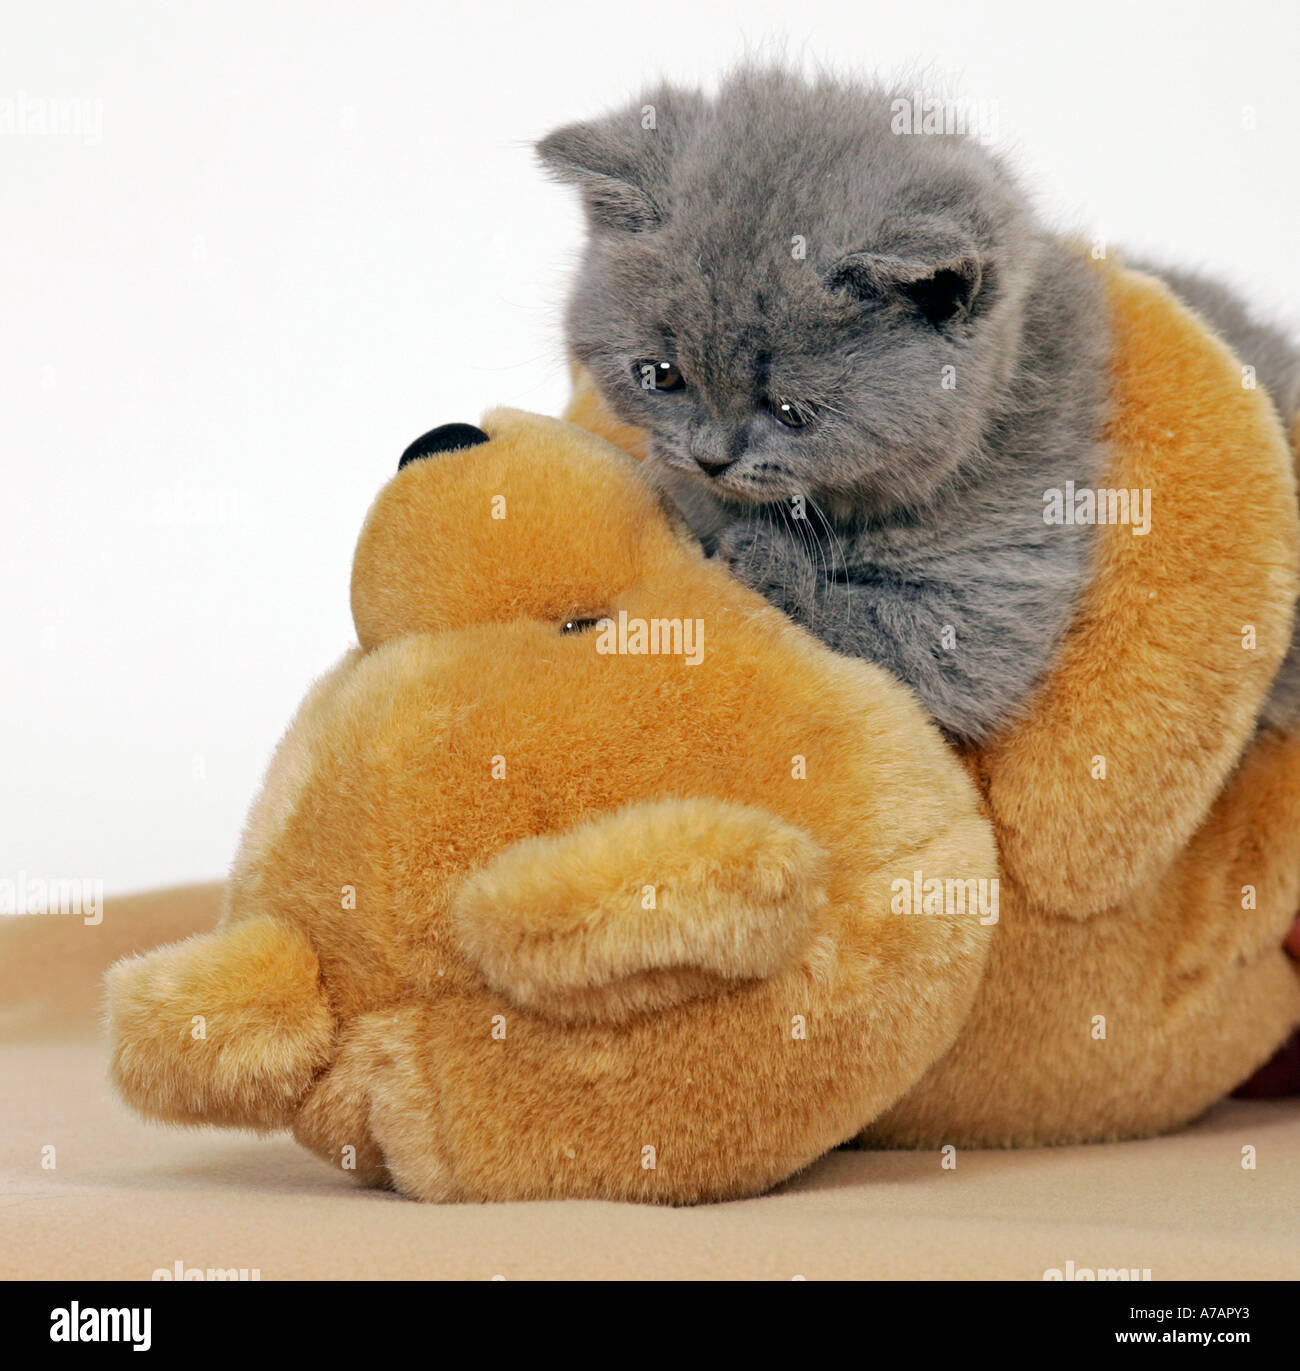 kitten with teddy bear